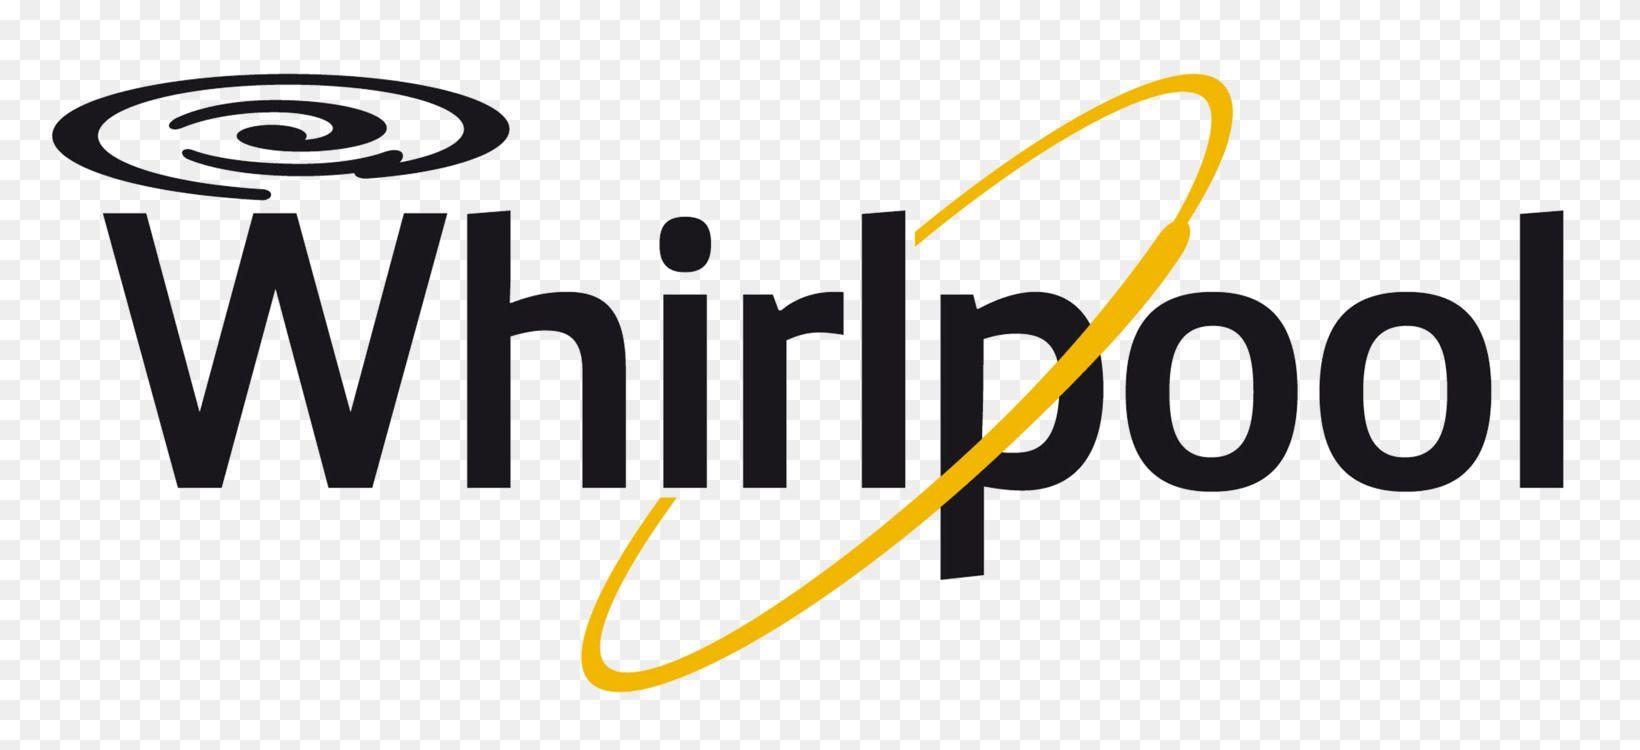 Home Appliance Logo - Whirlpool Corporation Home appliance Business Major appliance